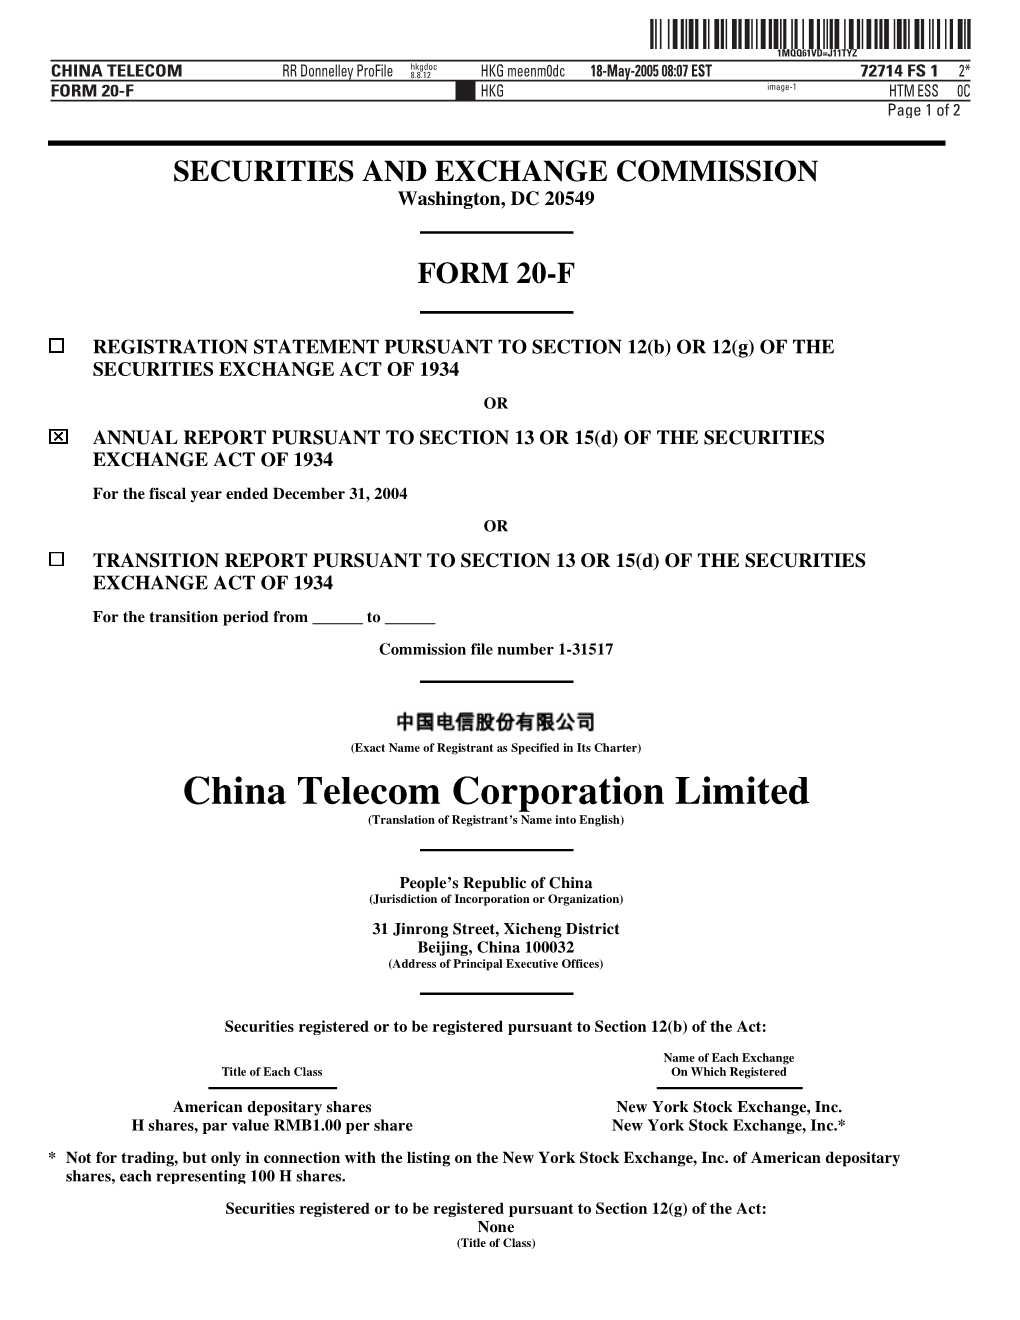 China Telecom Corporation Limited (Translation of Registrant’S Name Into English)